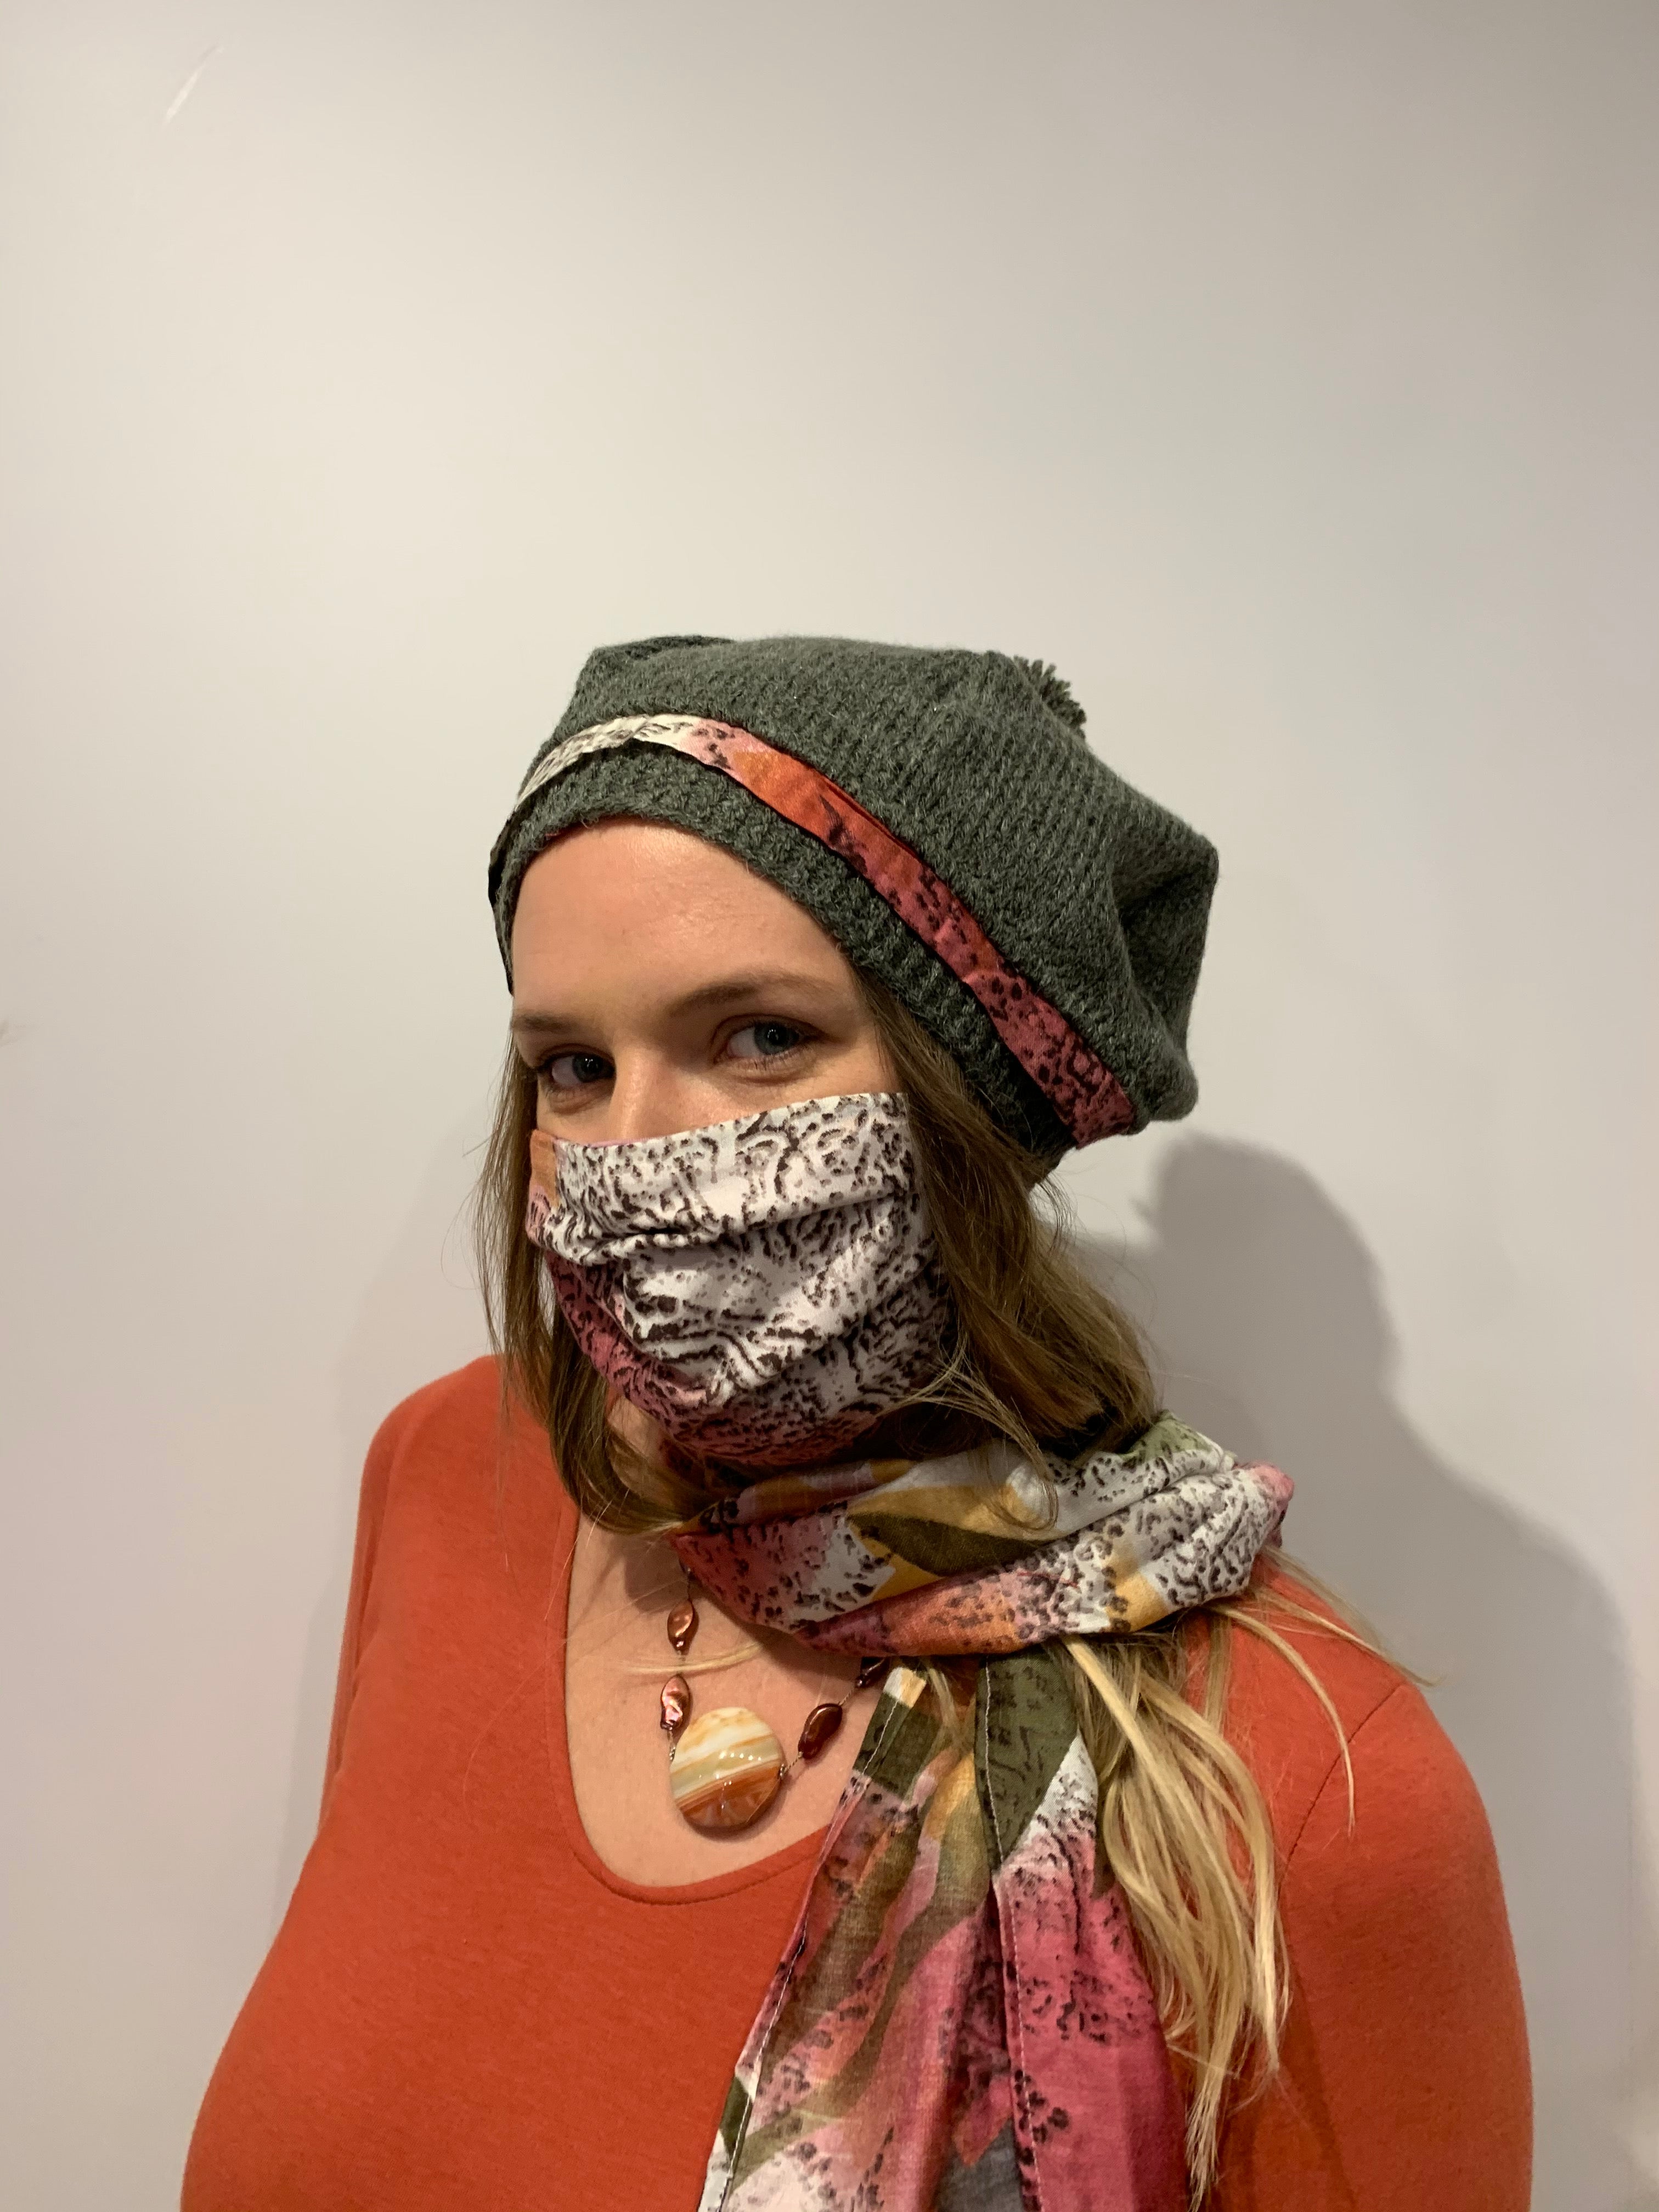 Artisan fall fashion forward hats/masks